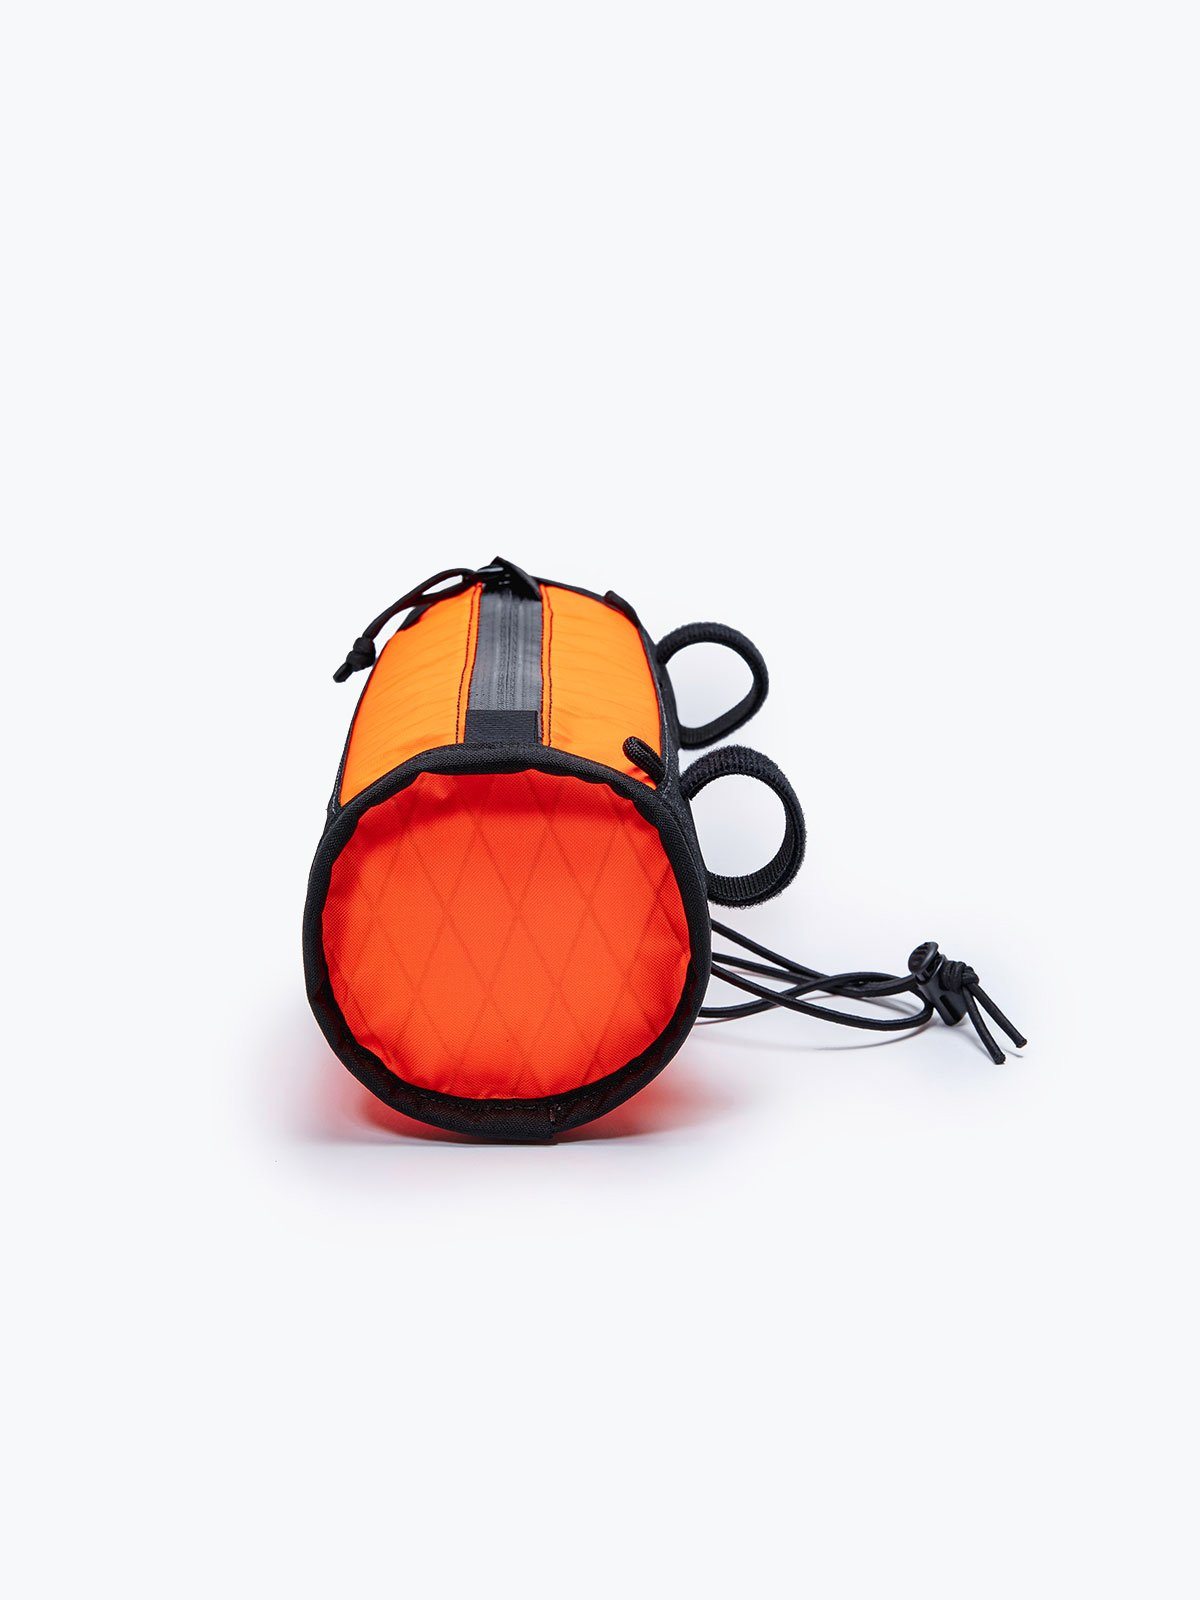 Toro Handlebar Bag by Mission Workshop - Weatherproof Bags & Technical Apparel - San Francisco & Los Angeles - Built to endure - Guaranteed forever